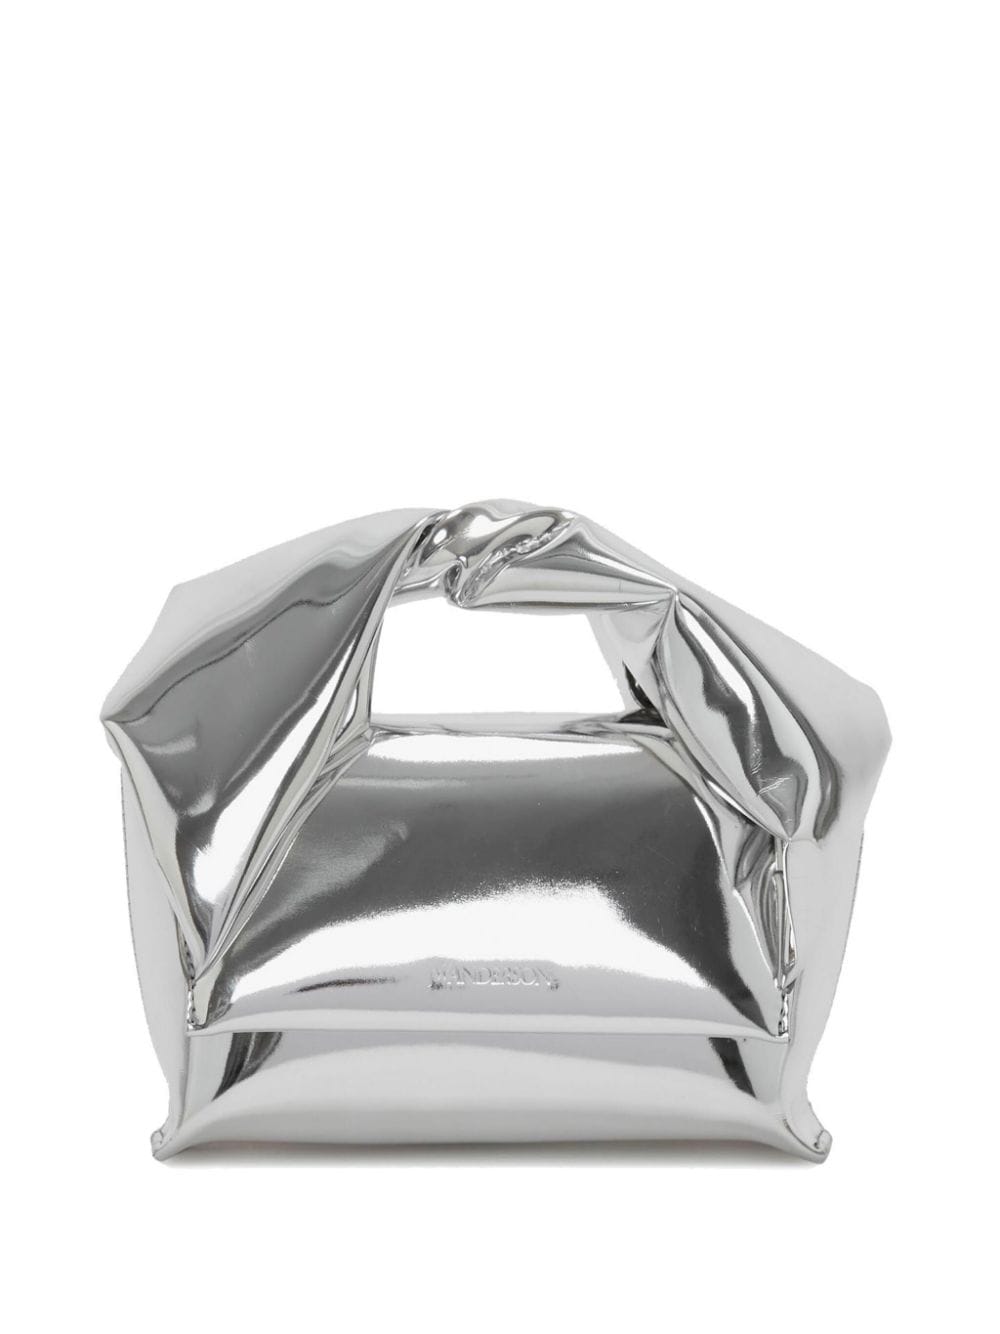 JW Anderson small Twister crossbody bag - Silver